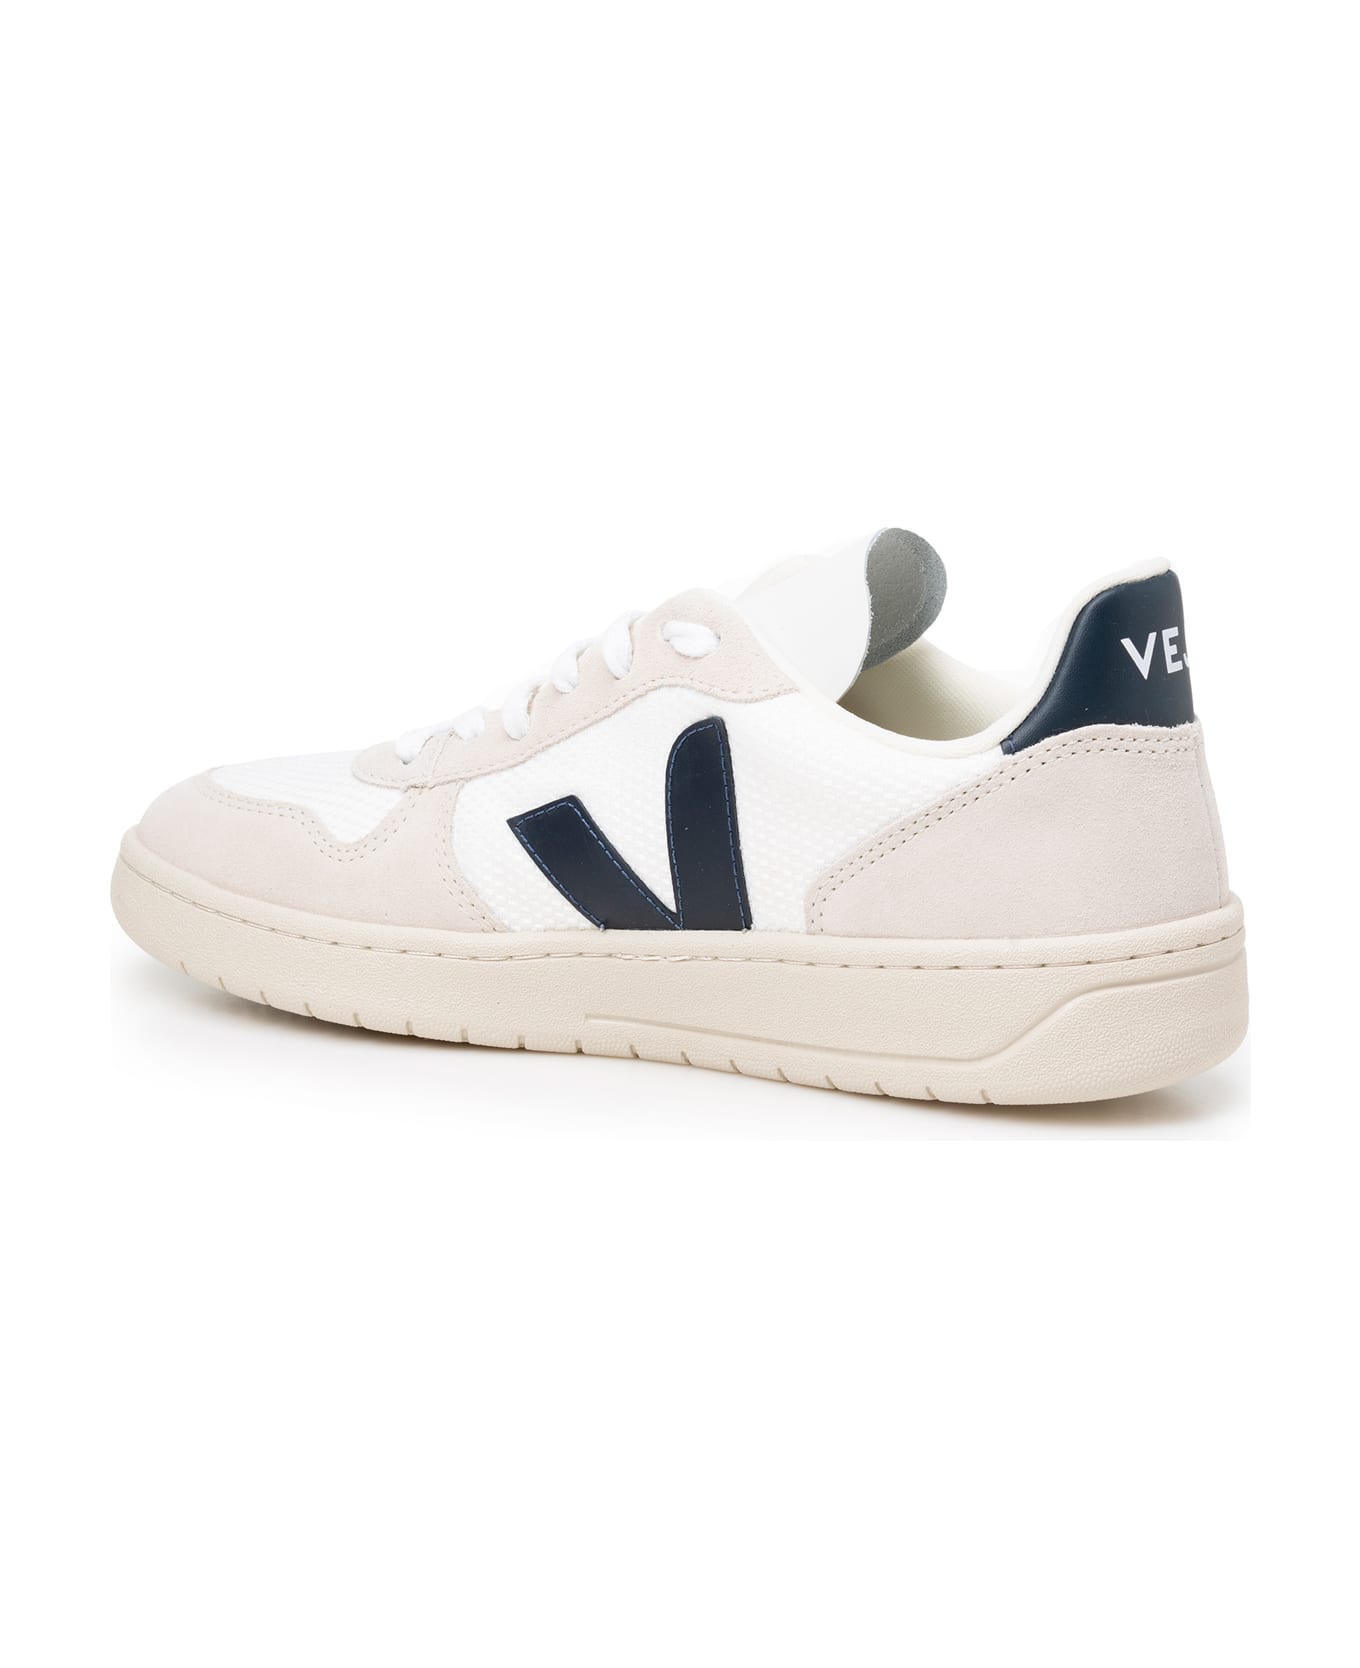 Veja Sneakers - White/nautico スニーカー